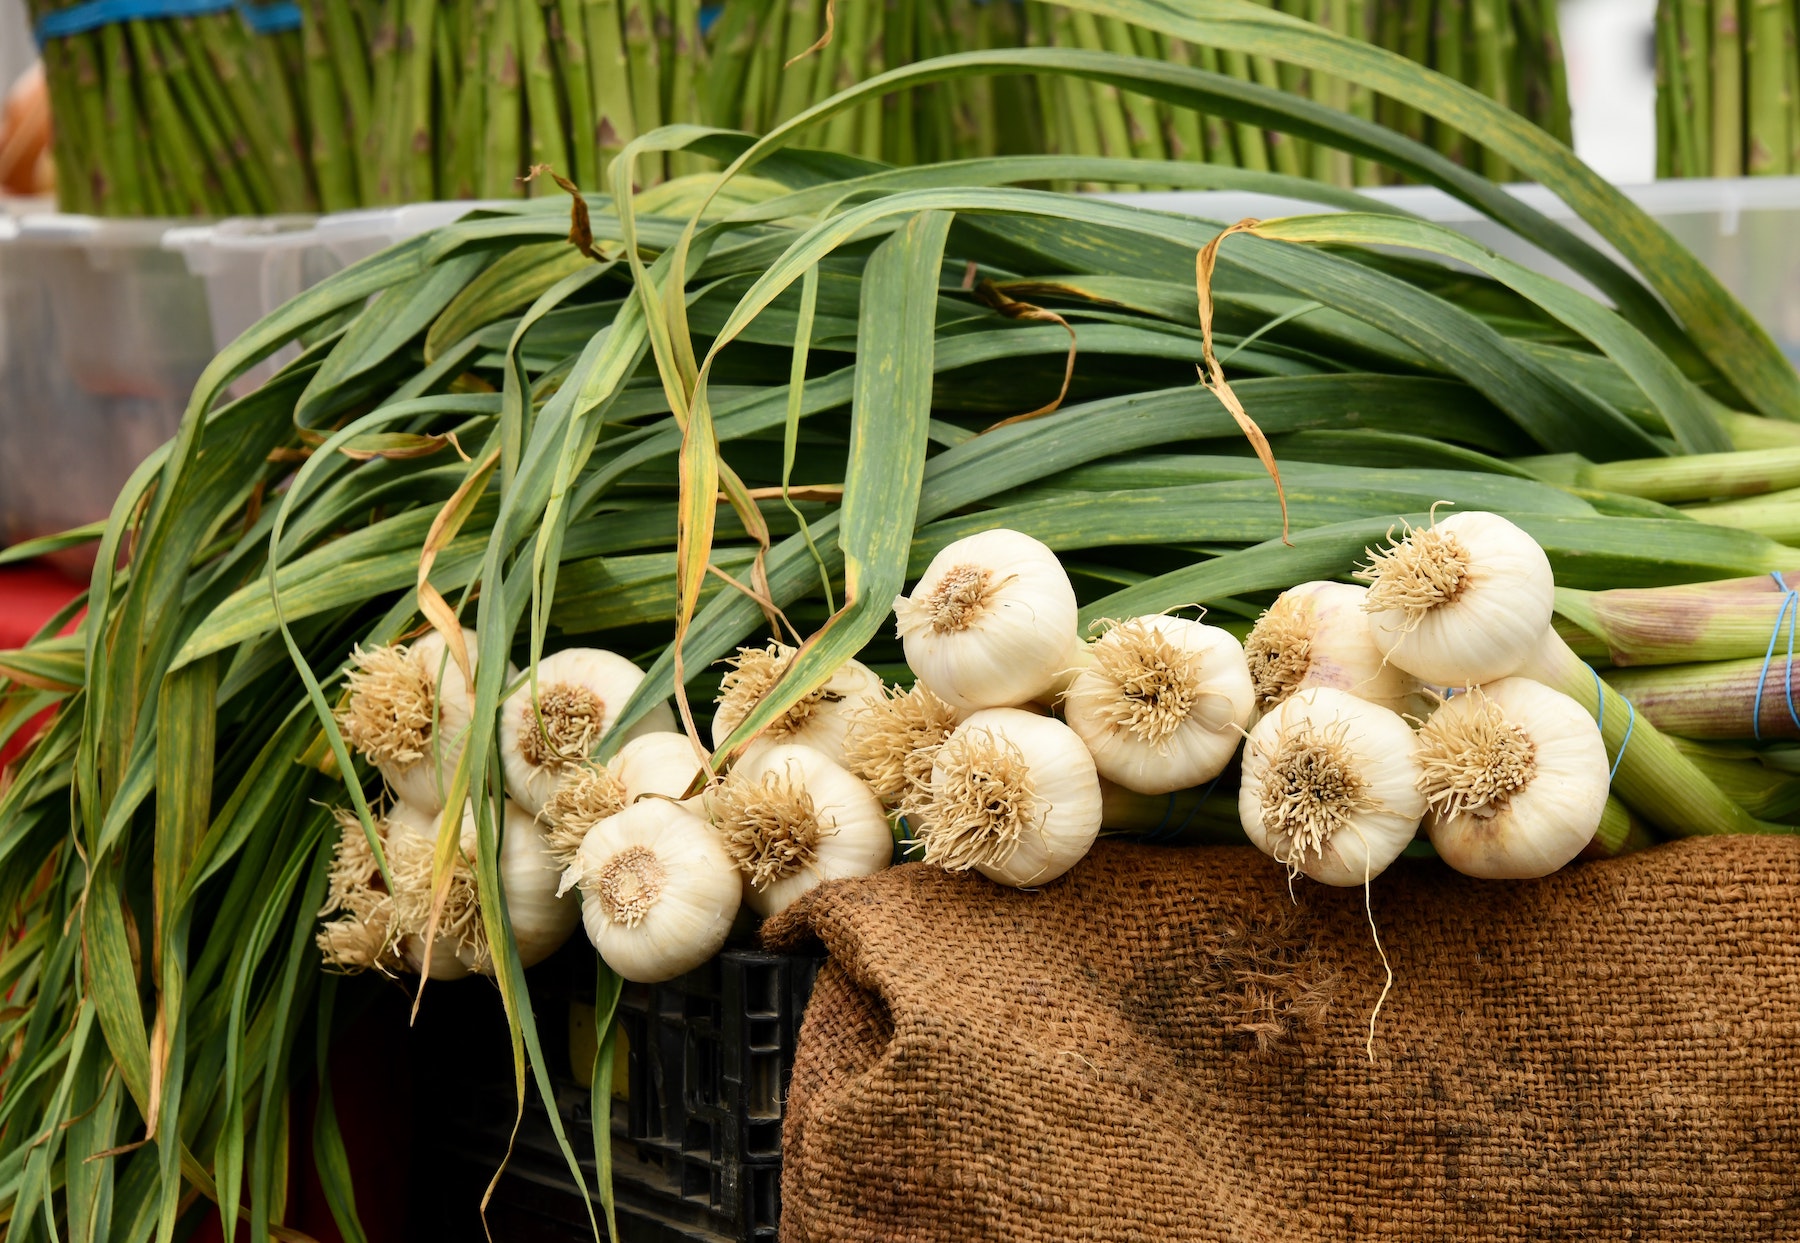 Plant Garlic in October